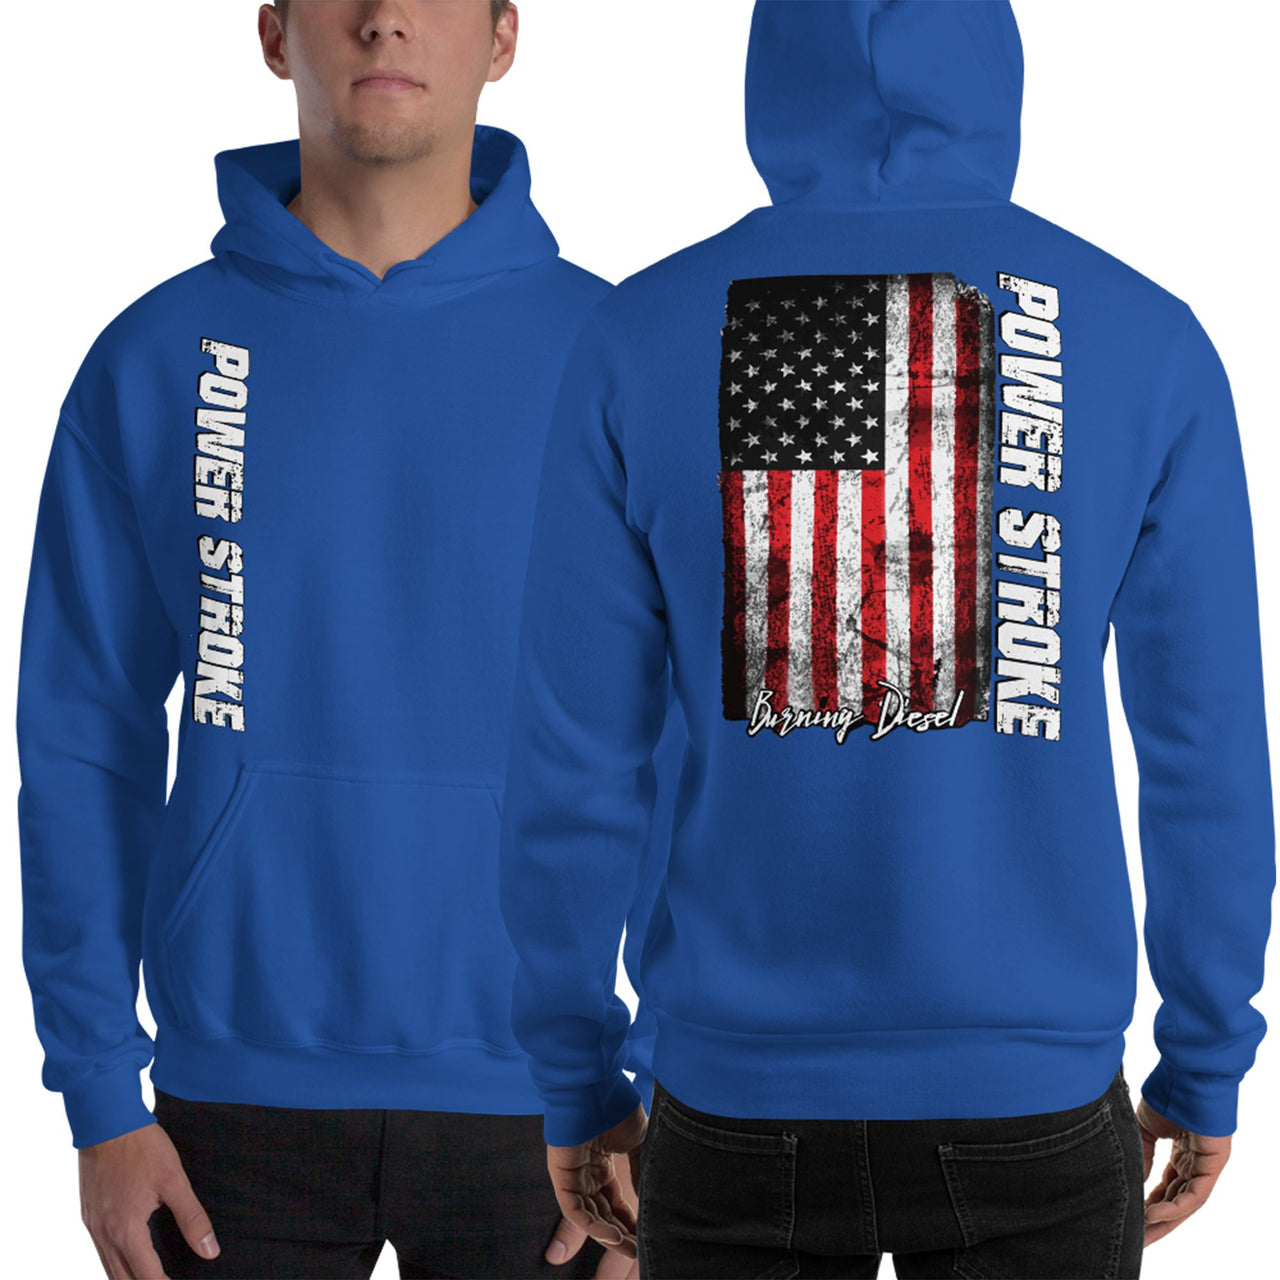 Powerstroke Hoodie with American Flag modeled in blue